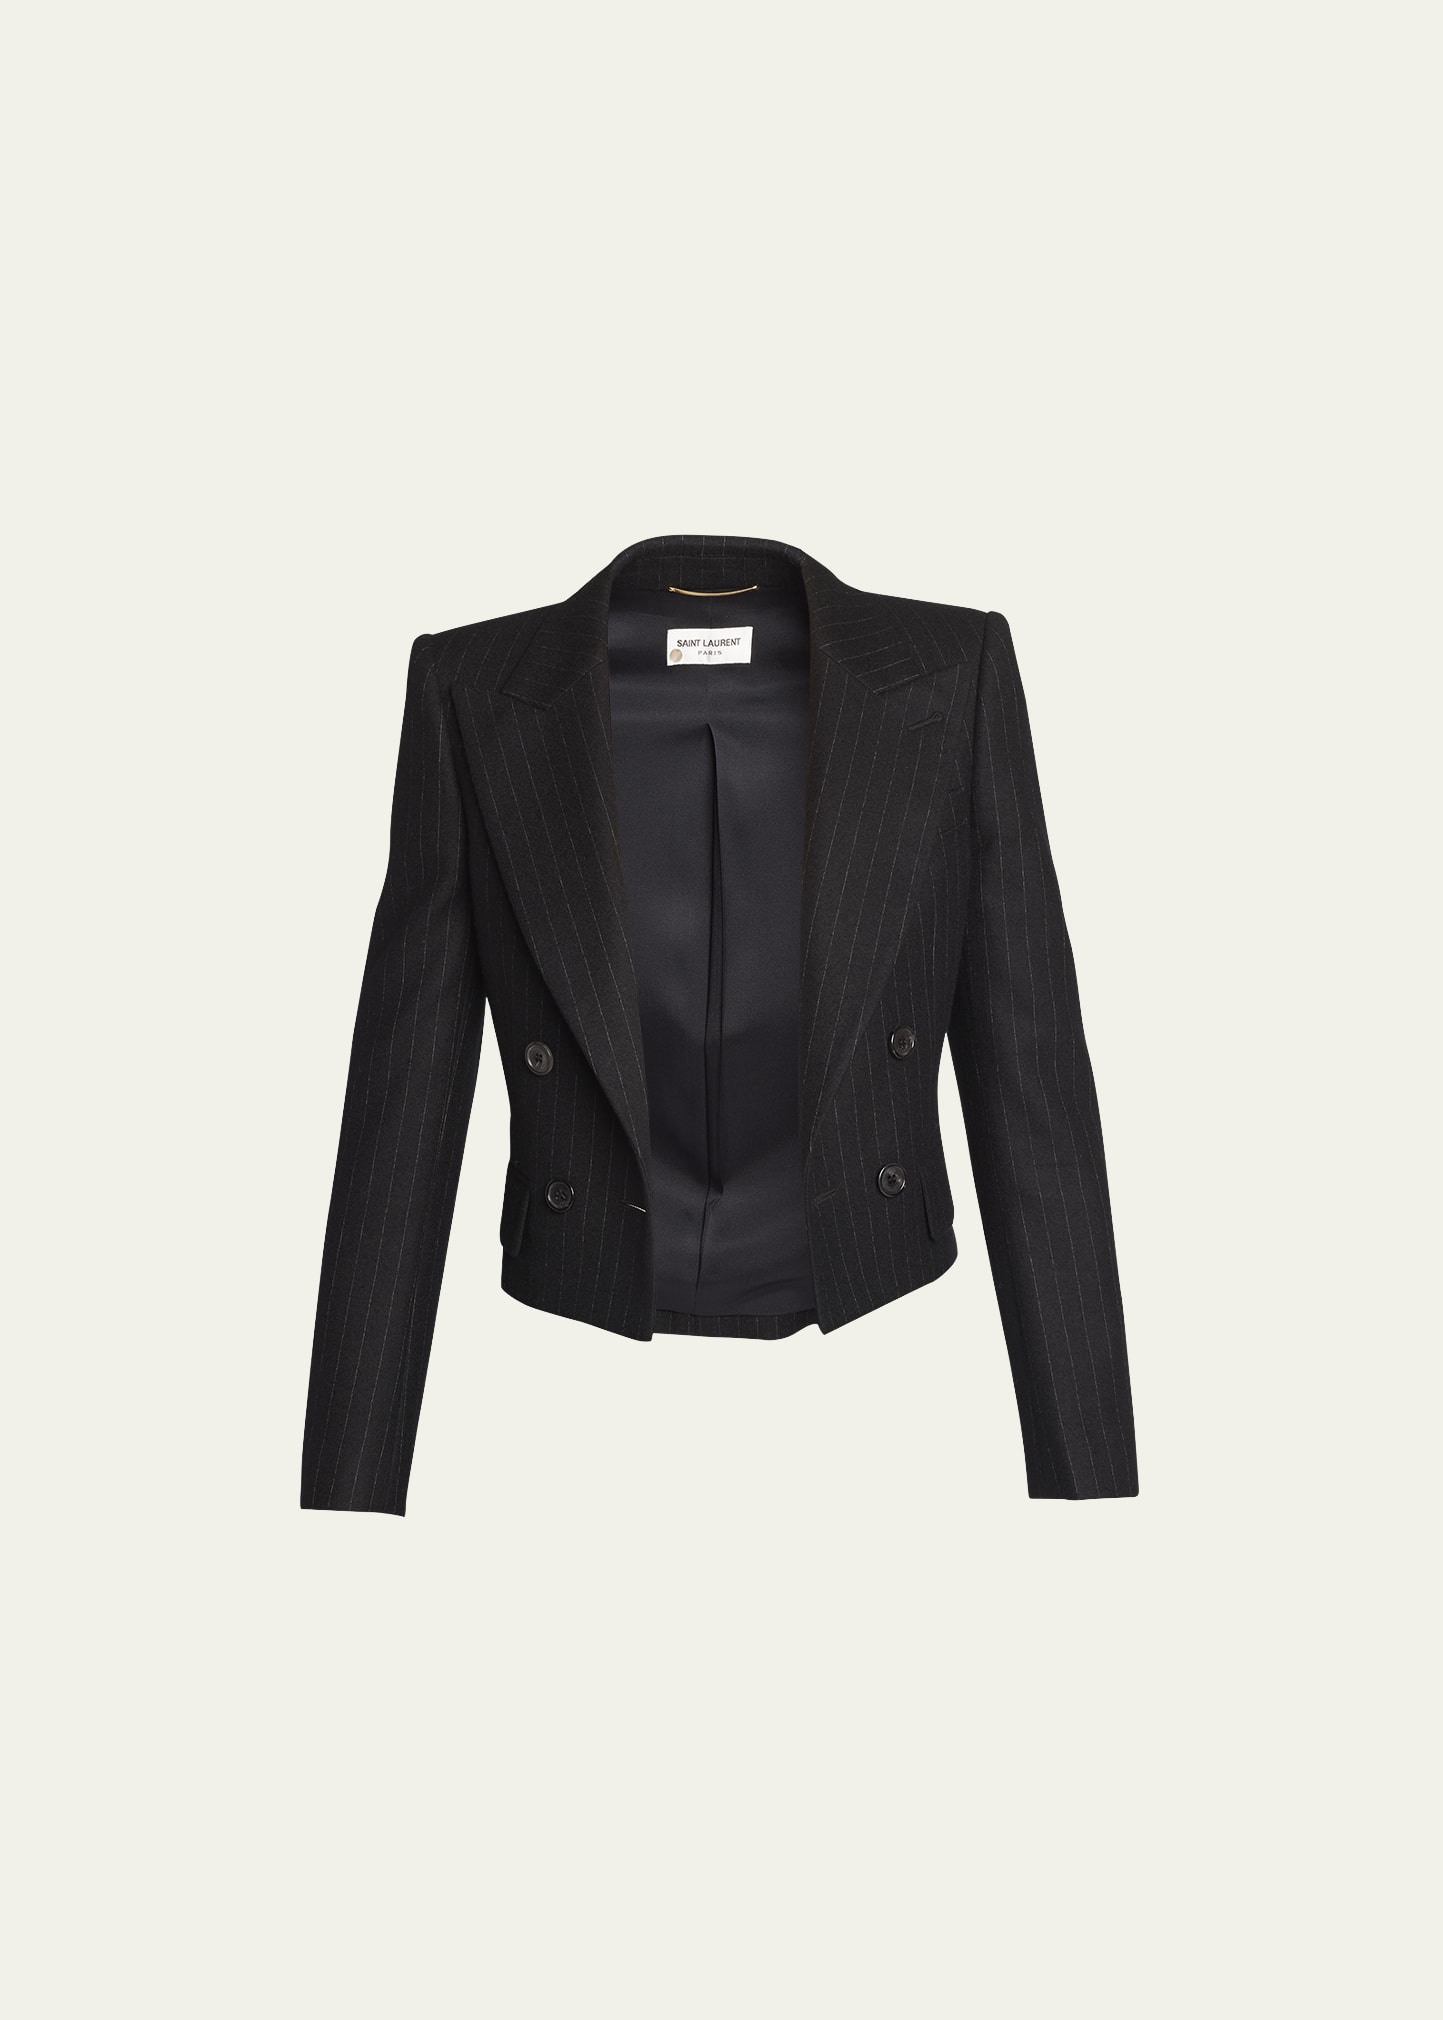 Women's Ready-to-Wear, Jackets,Shirts&Dresses, Saint Laurent